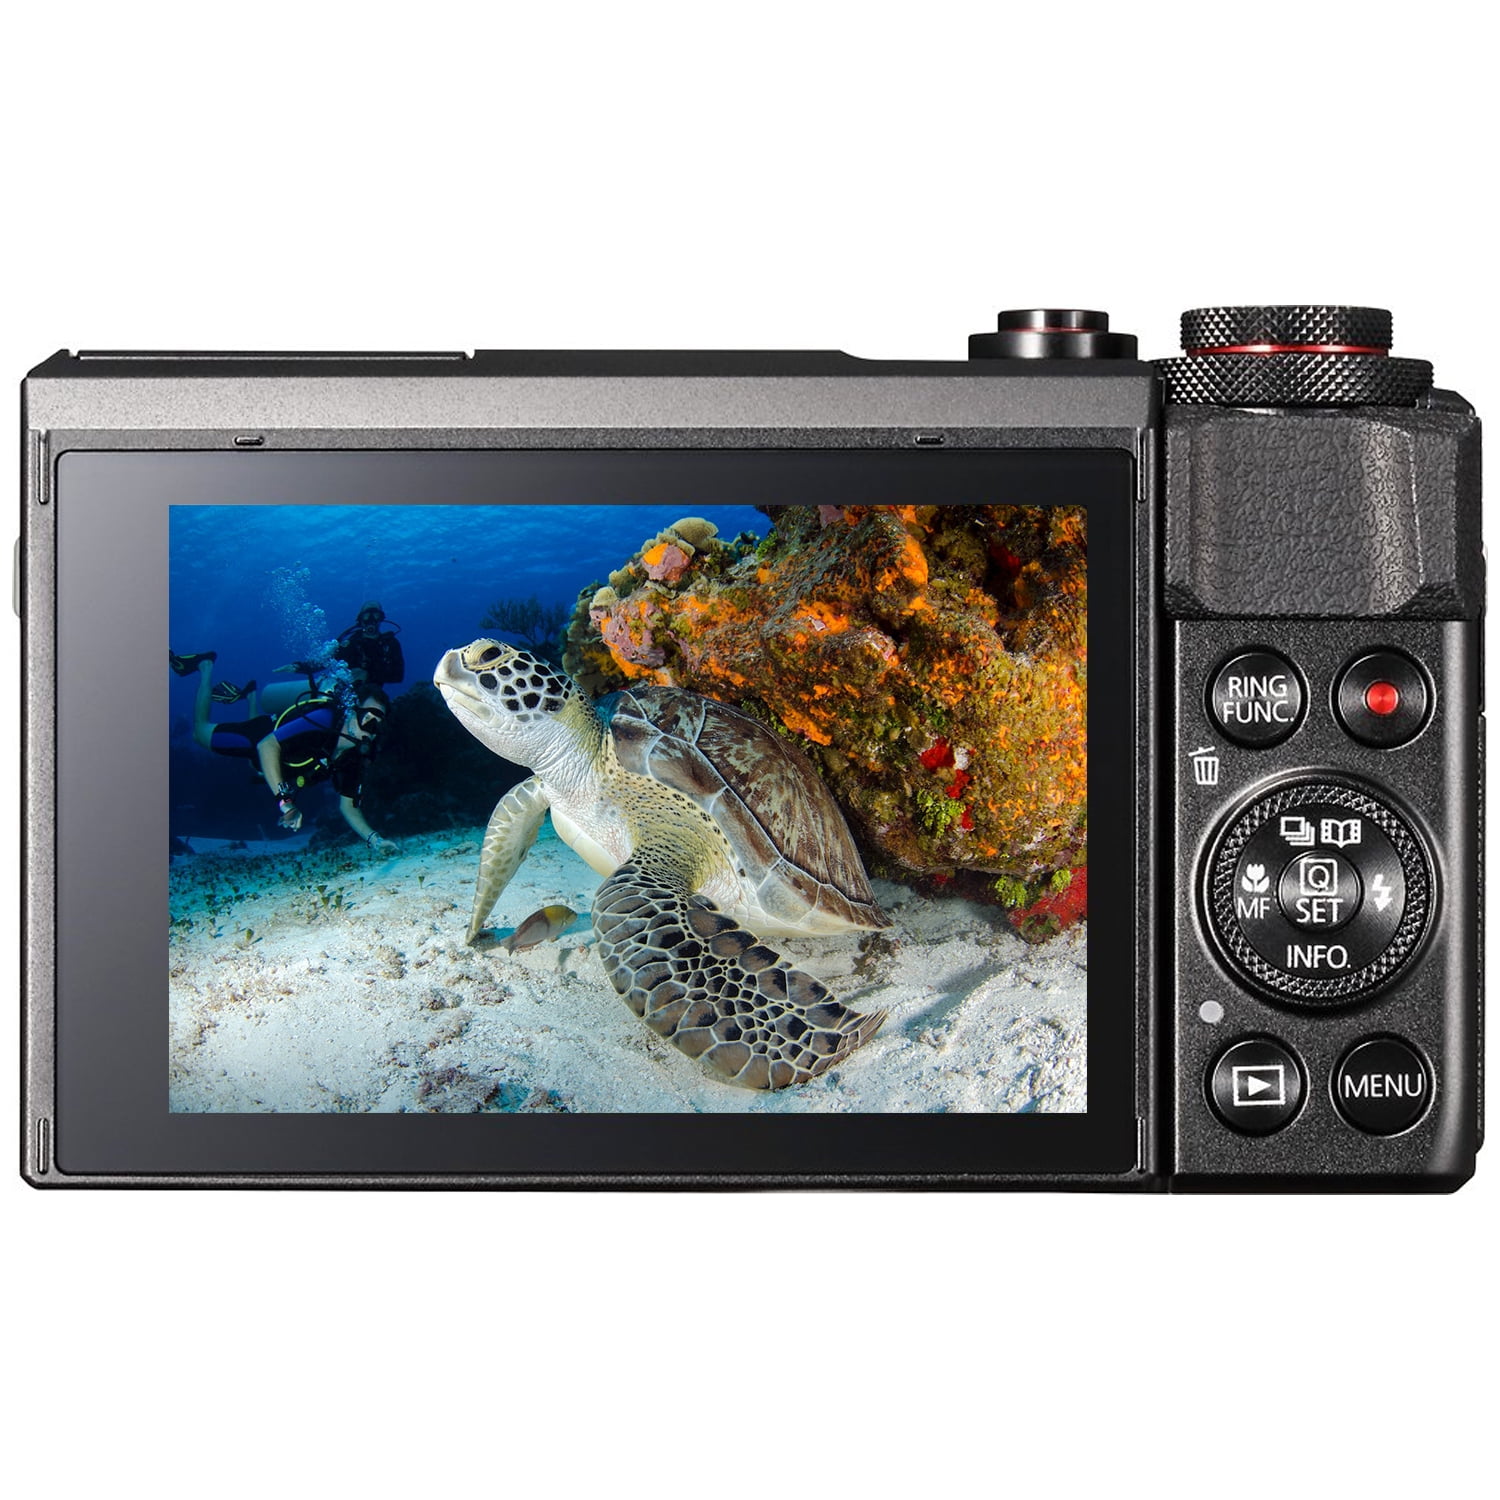 Canon PowerShot G7 X Mark II 20.1MP Digital Camera- Black 